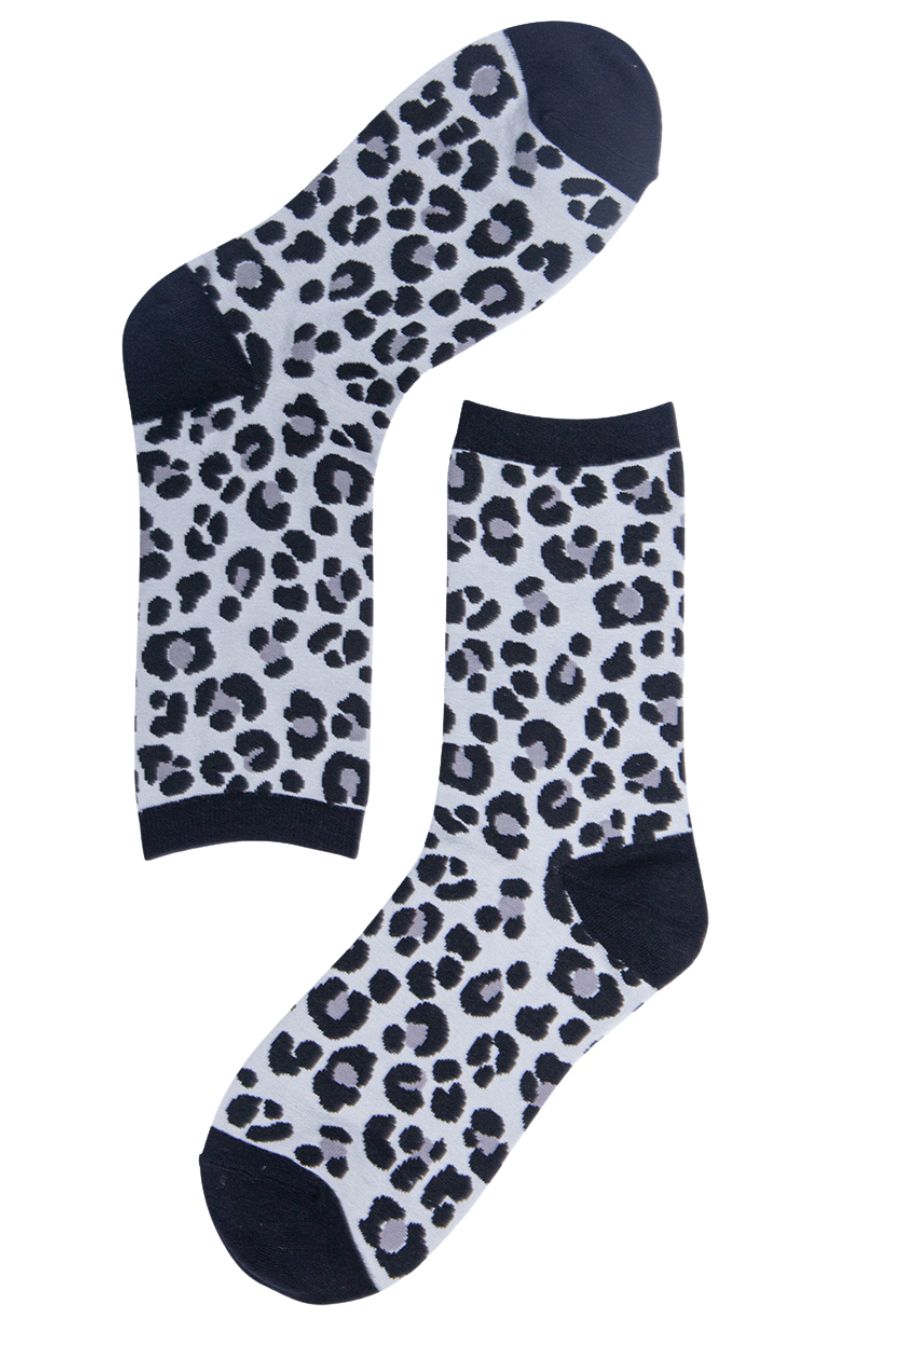 leopard print bamboo socks in grey and black